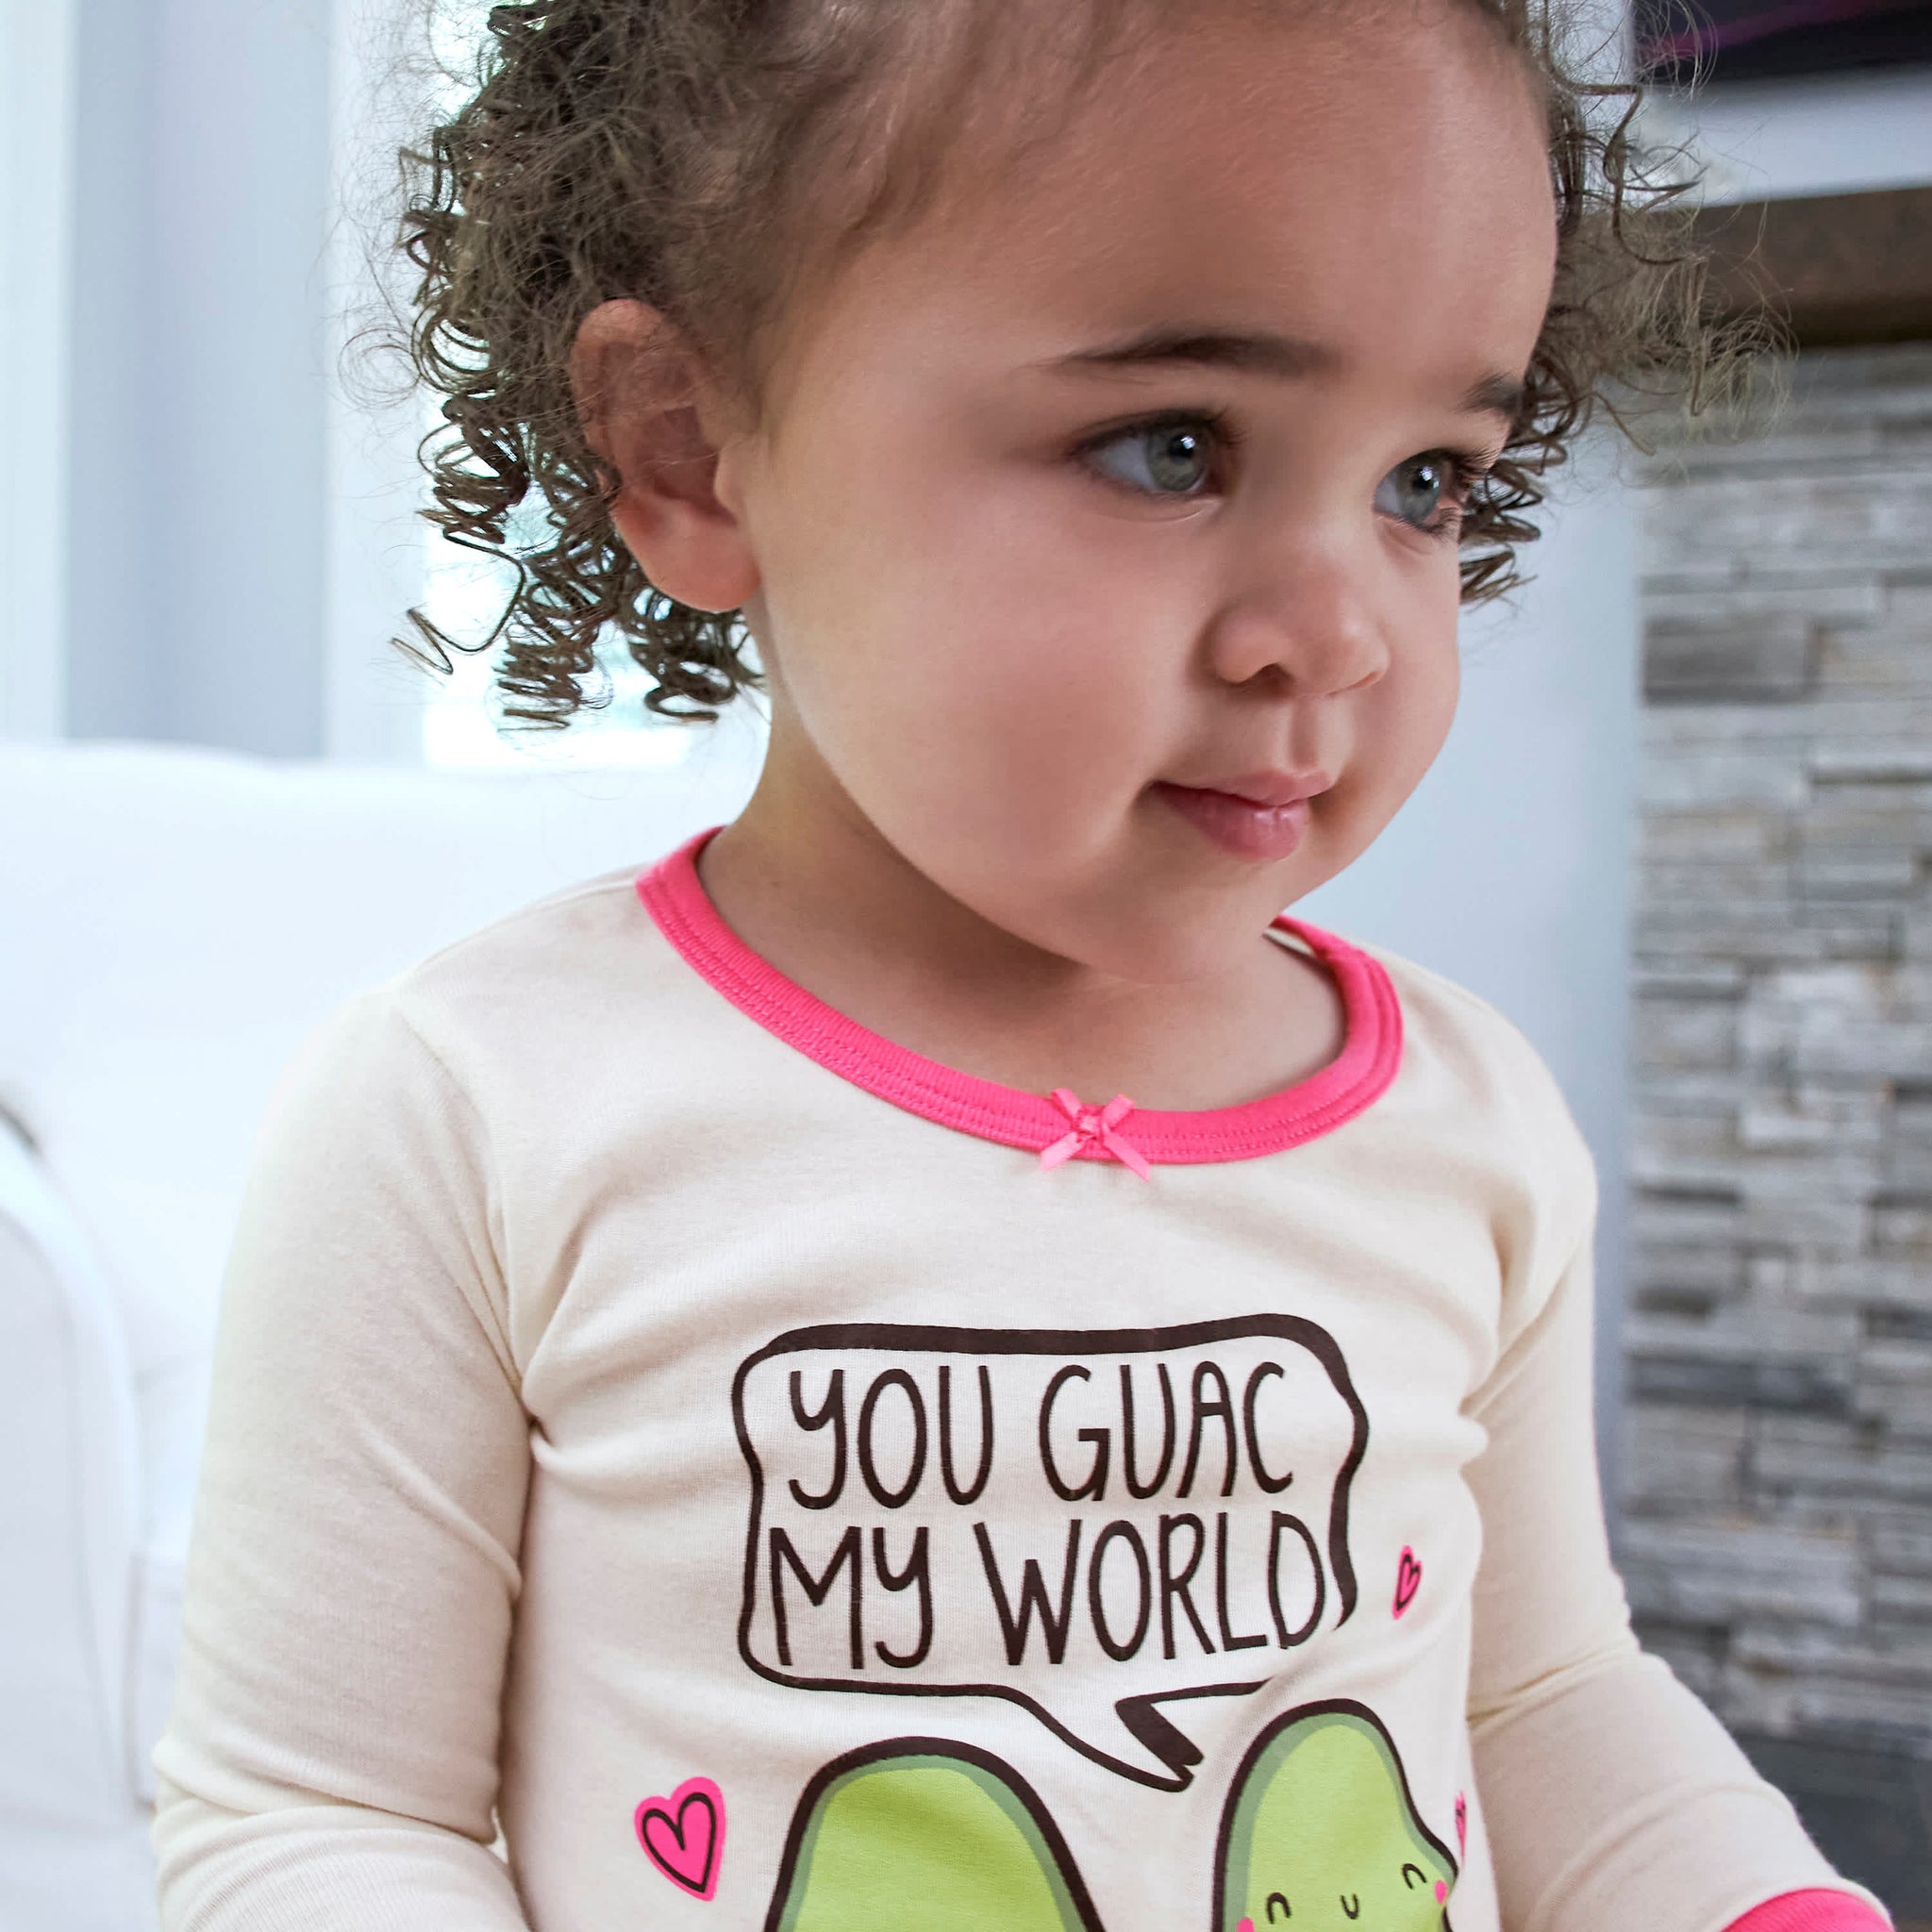 4-Piece Infant & Toddler Girls Pink Avocado Snug Fit Cotton Pajamas-Gerber Childrenswear Wholesale